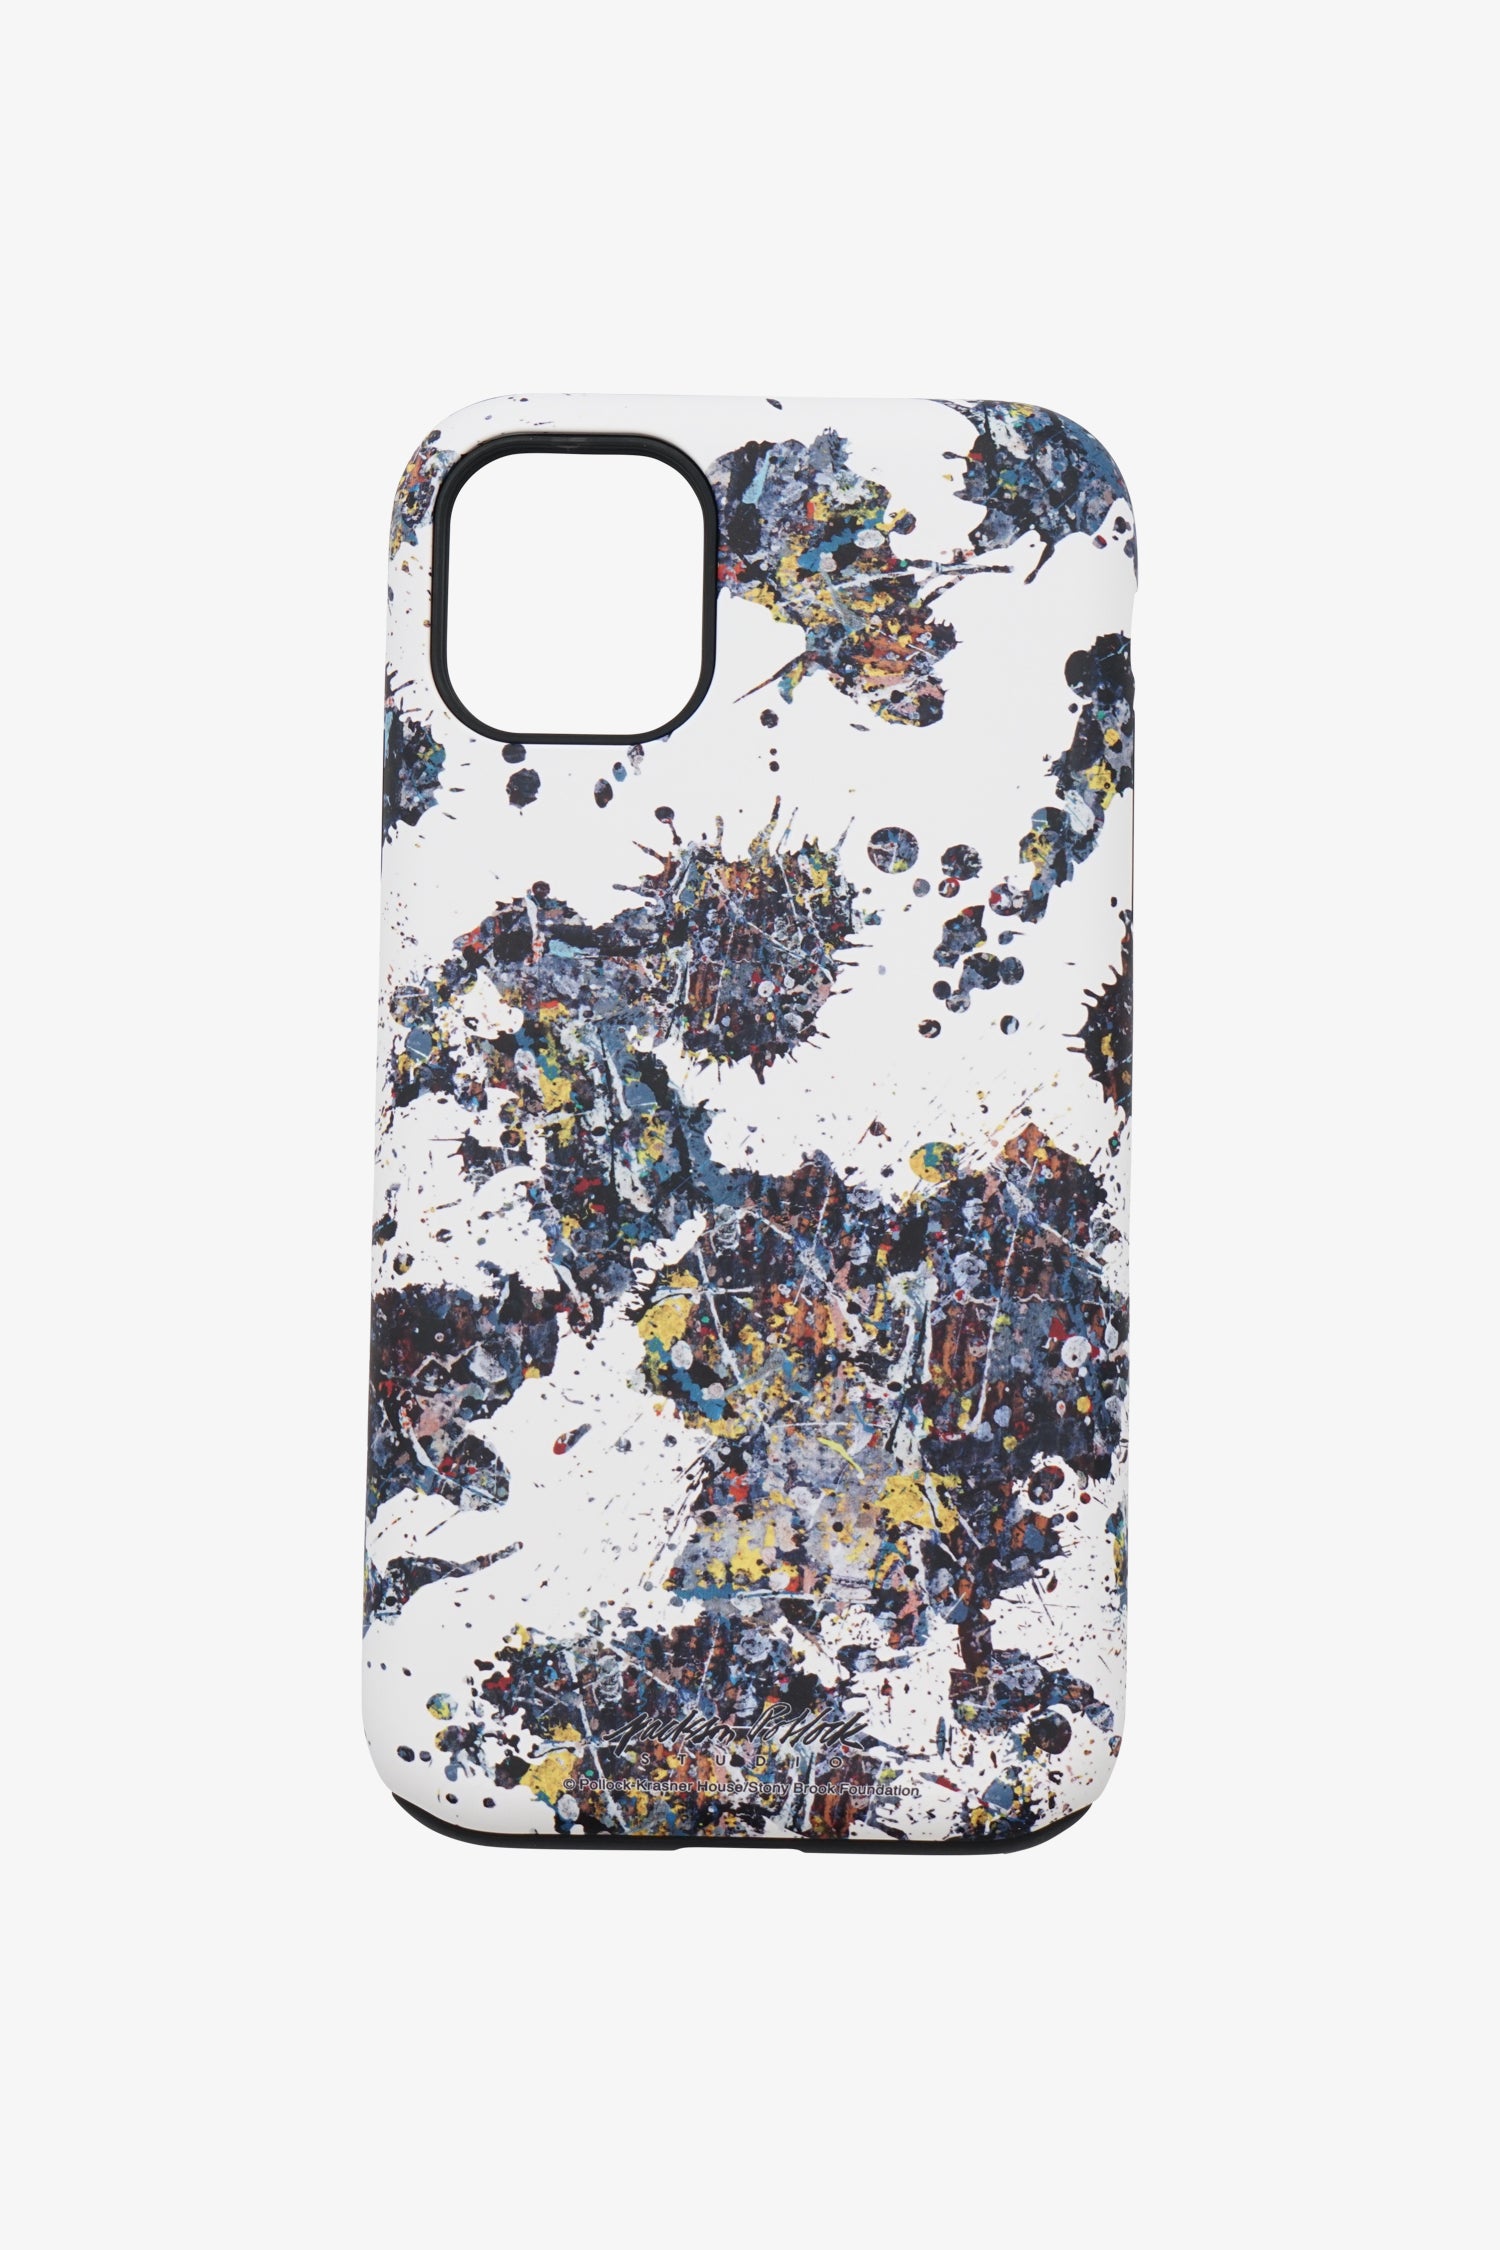 Selectshop FRAME - SYNC Jackson Pollock Studio IPhone 11 Case"Splash" Collectibles Dubai